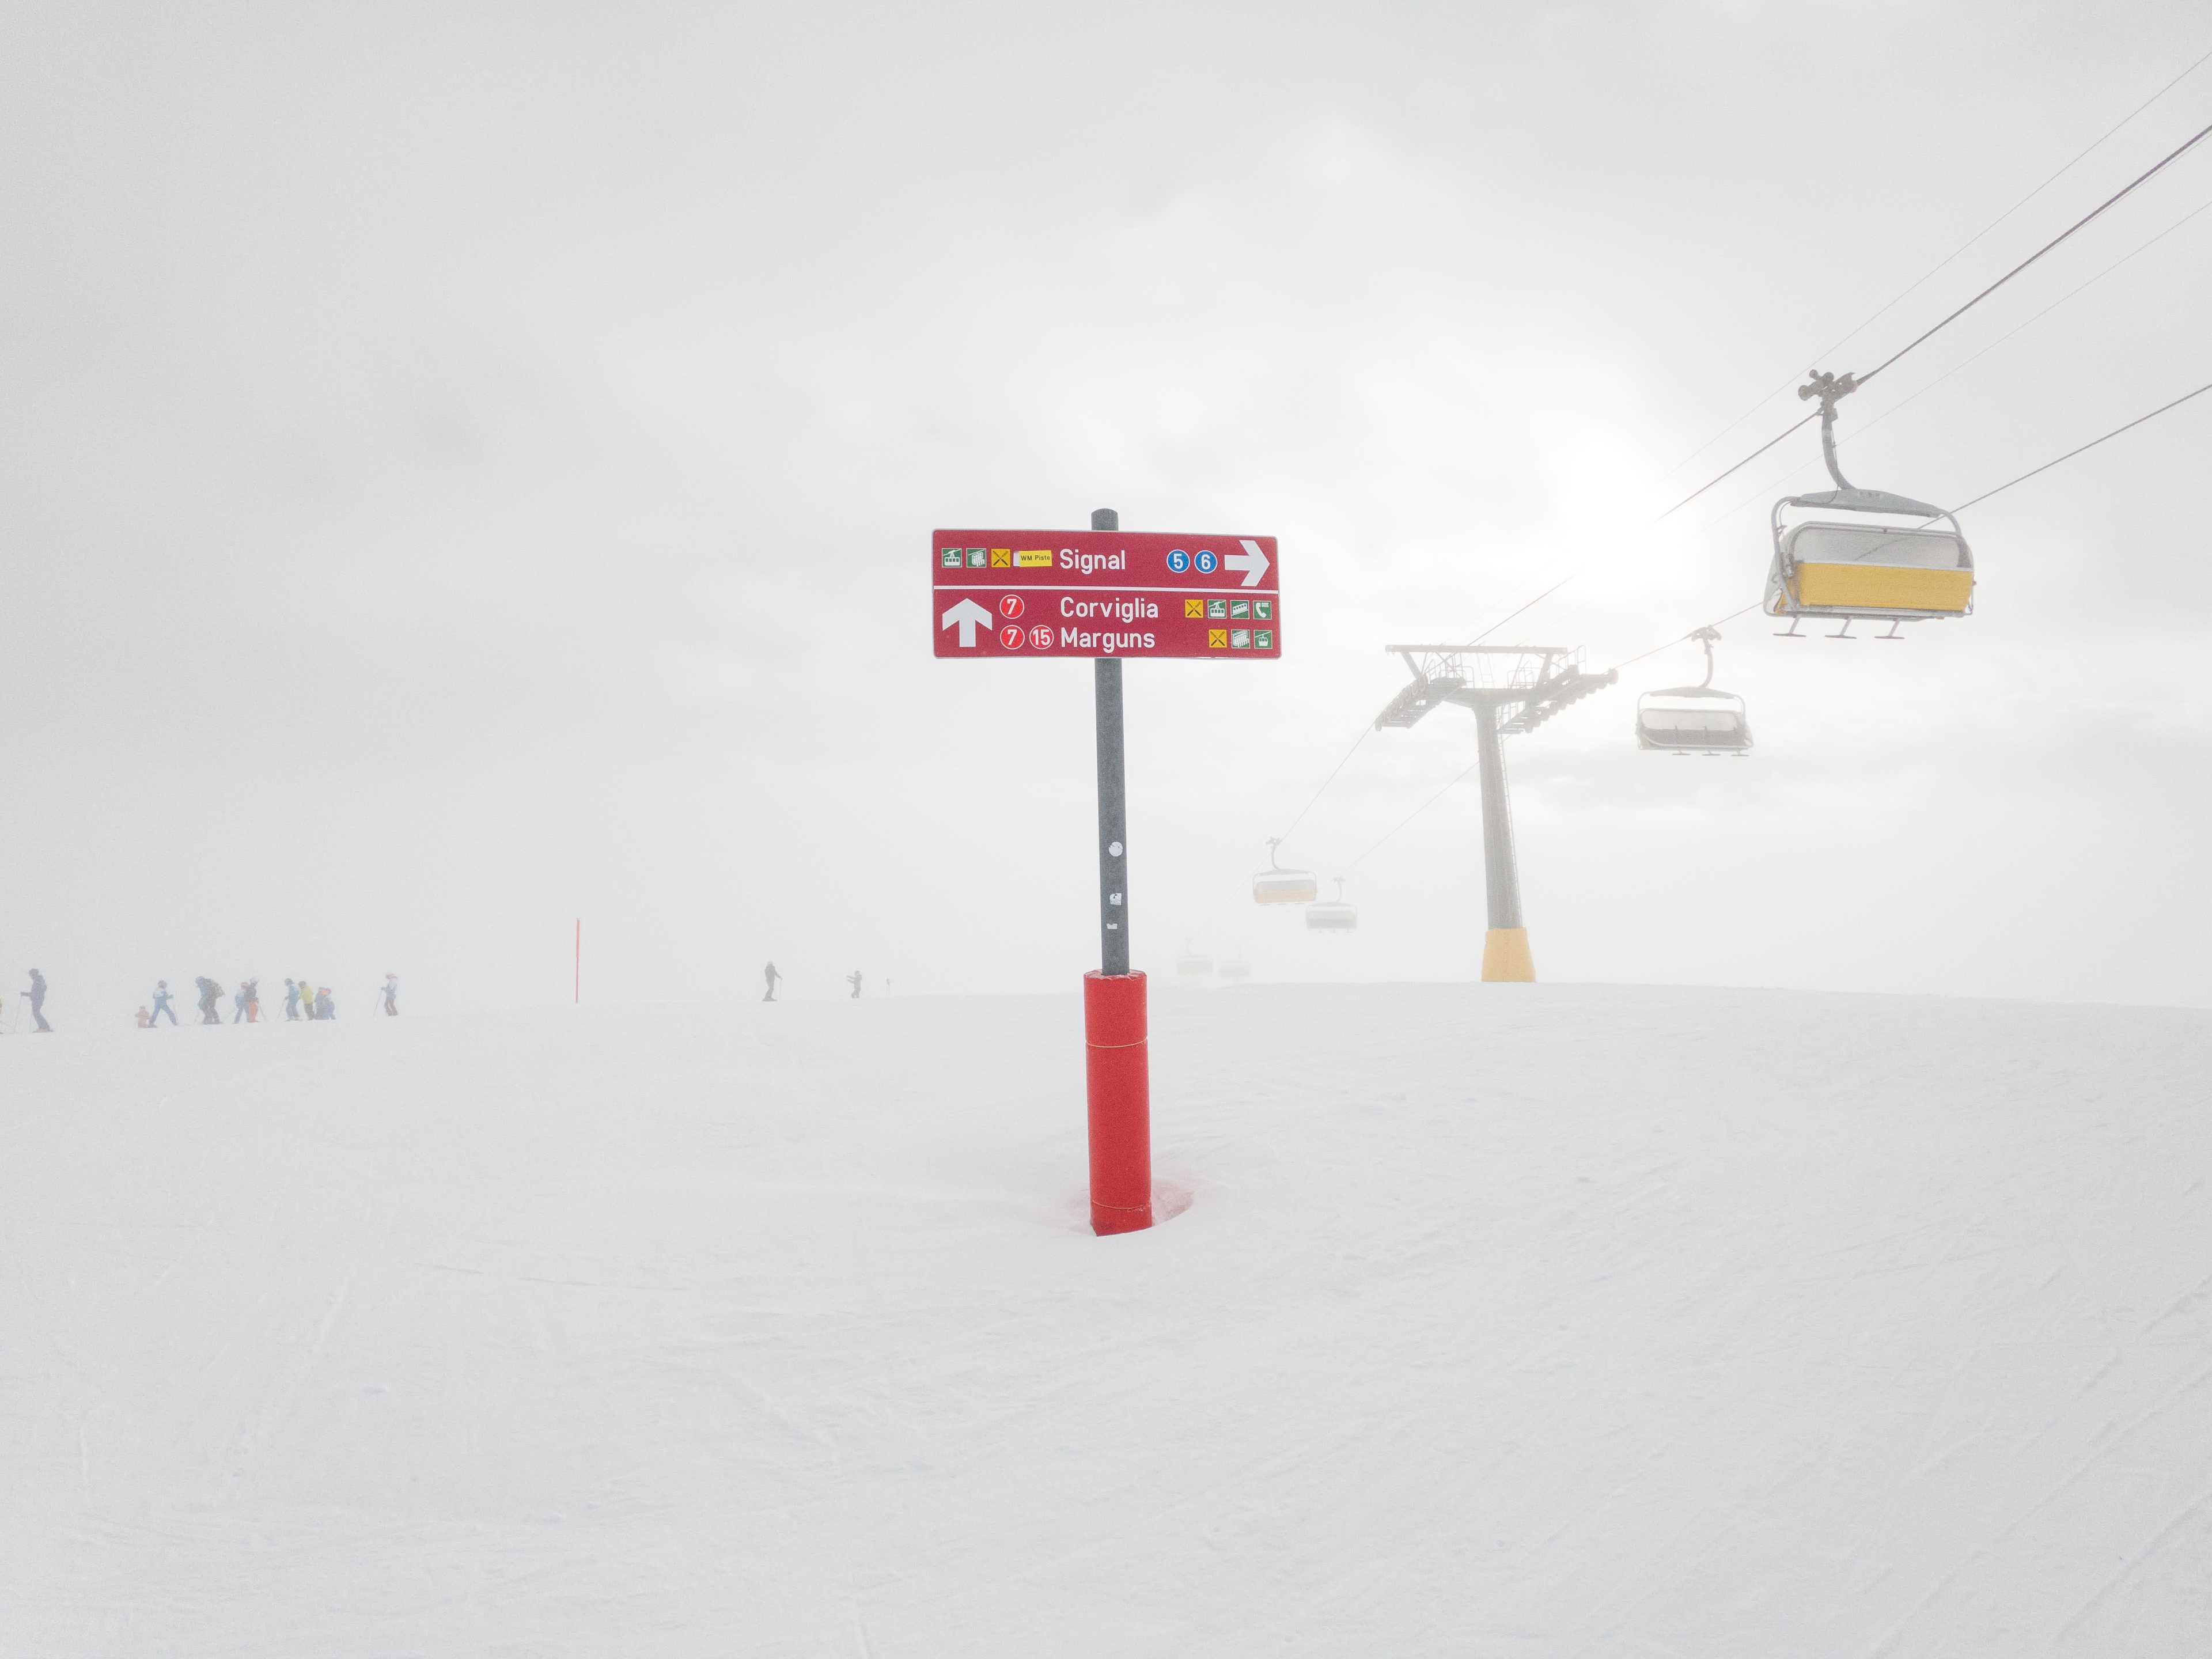 More harsh conditions now, Corviglia, St. Moritz